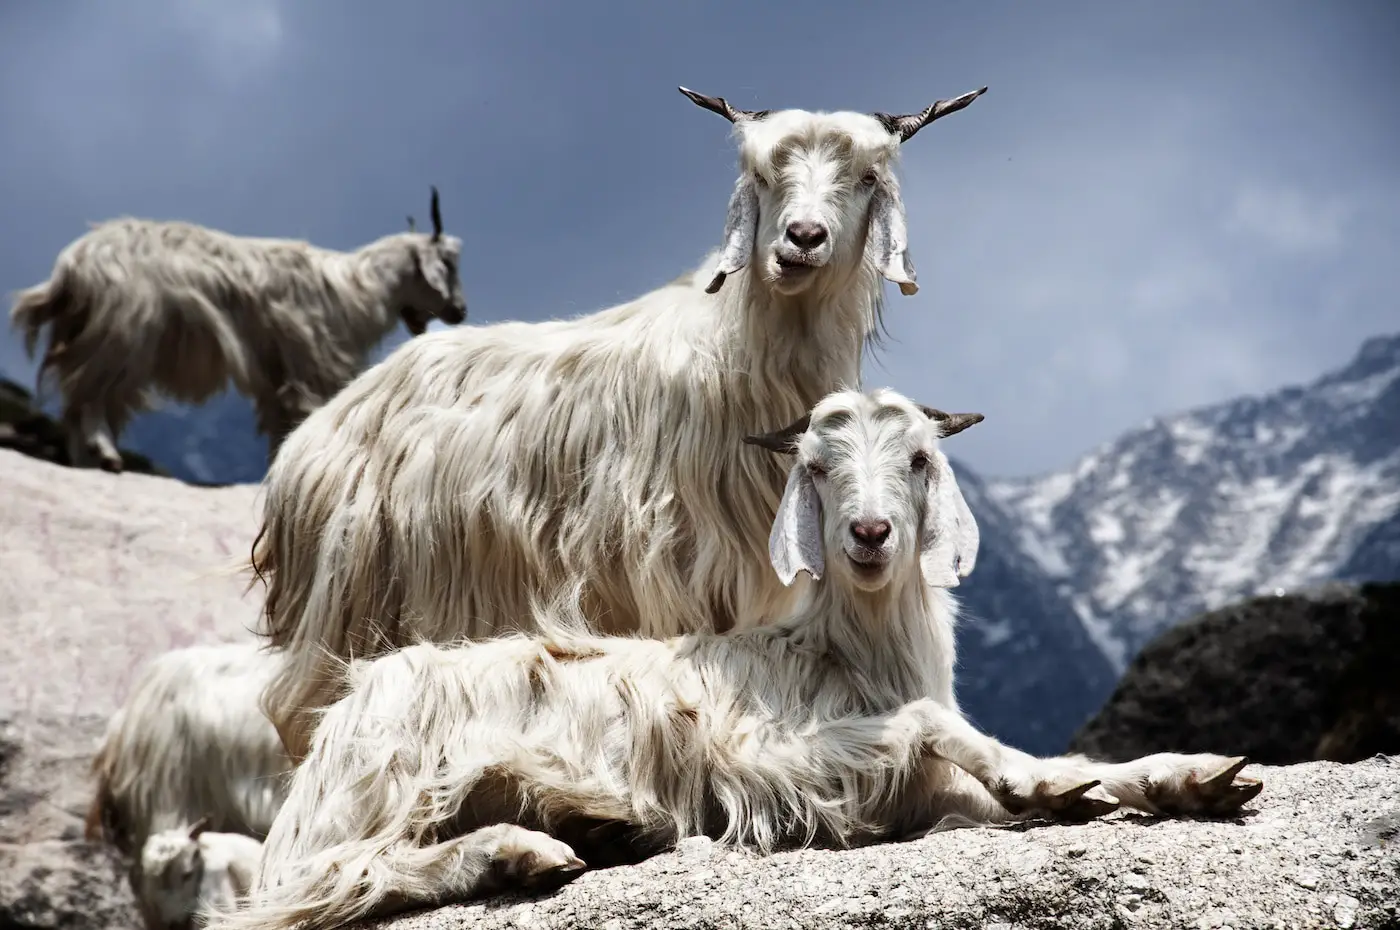 Goats on the Rocks